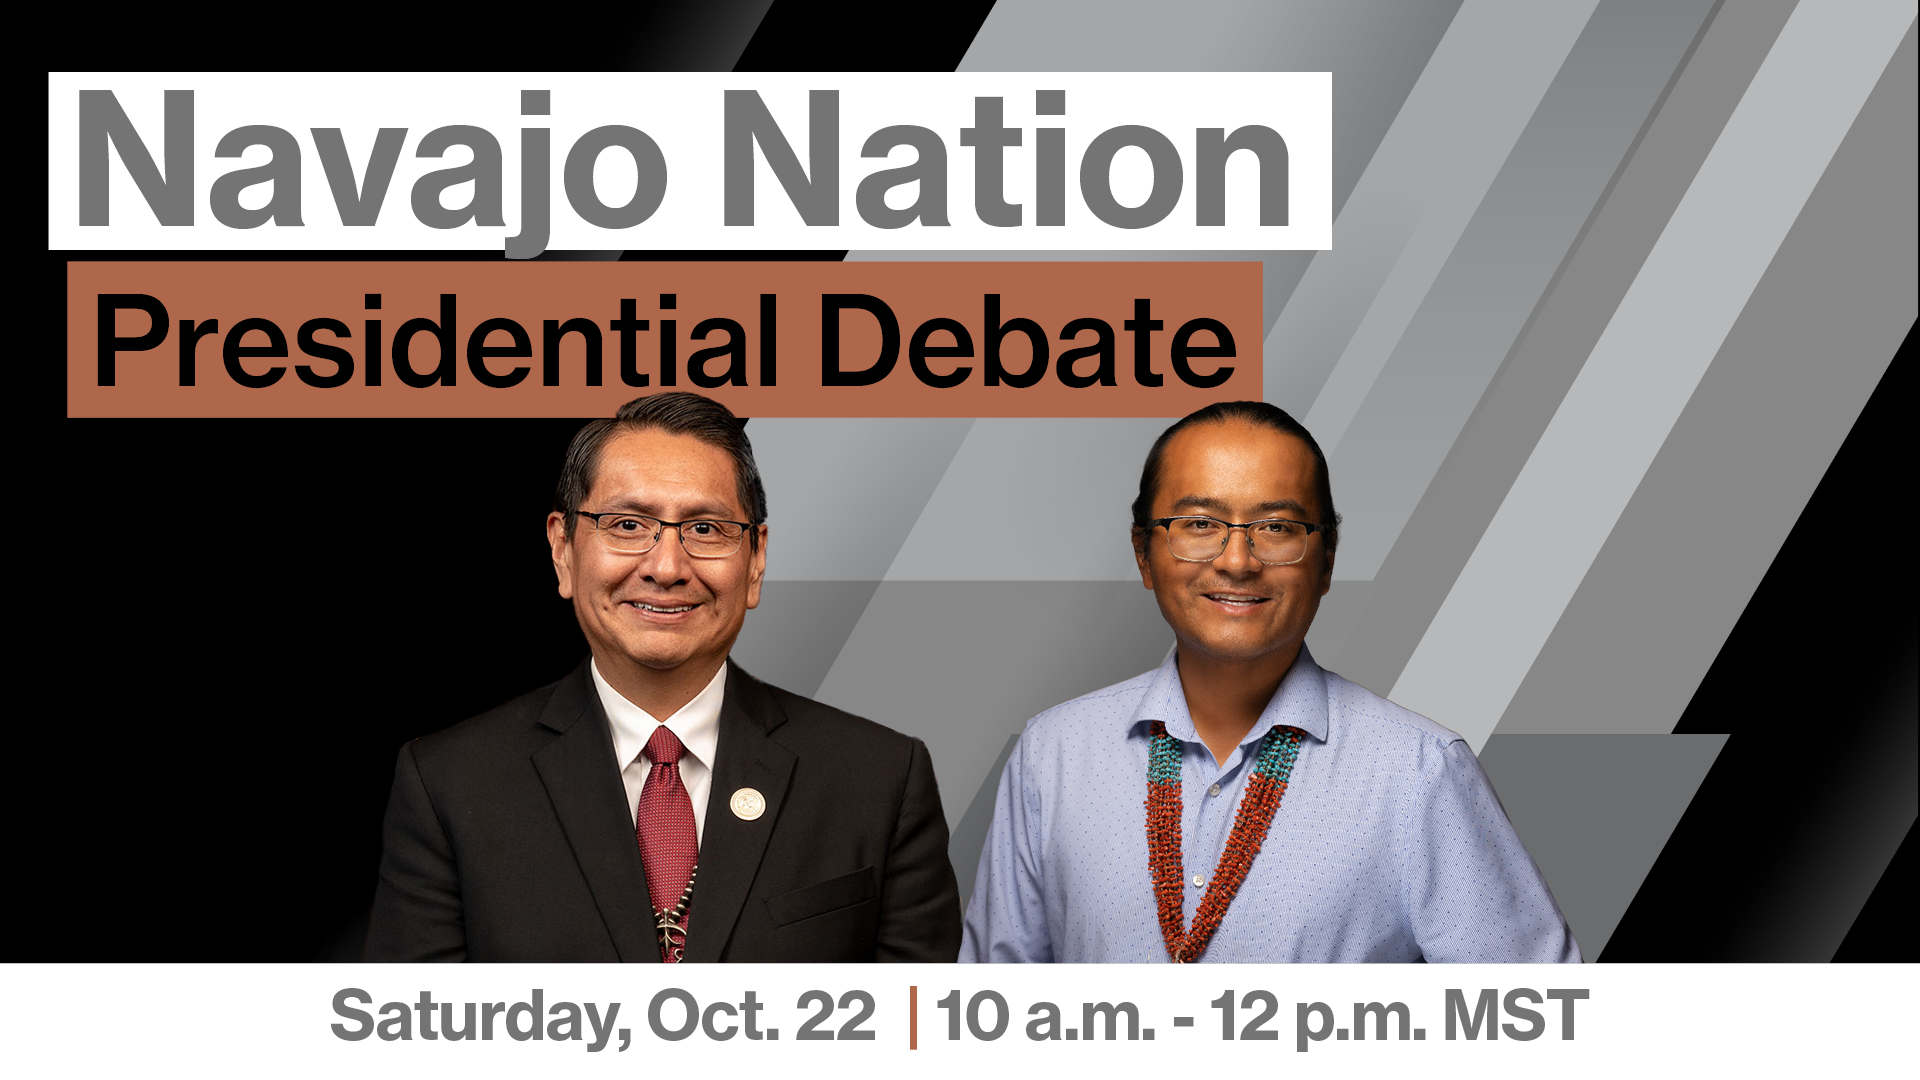 Navajo Nation Presidential Debate